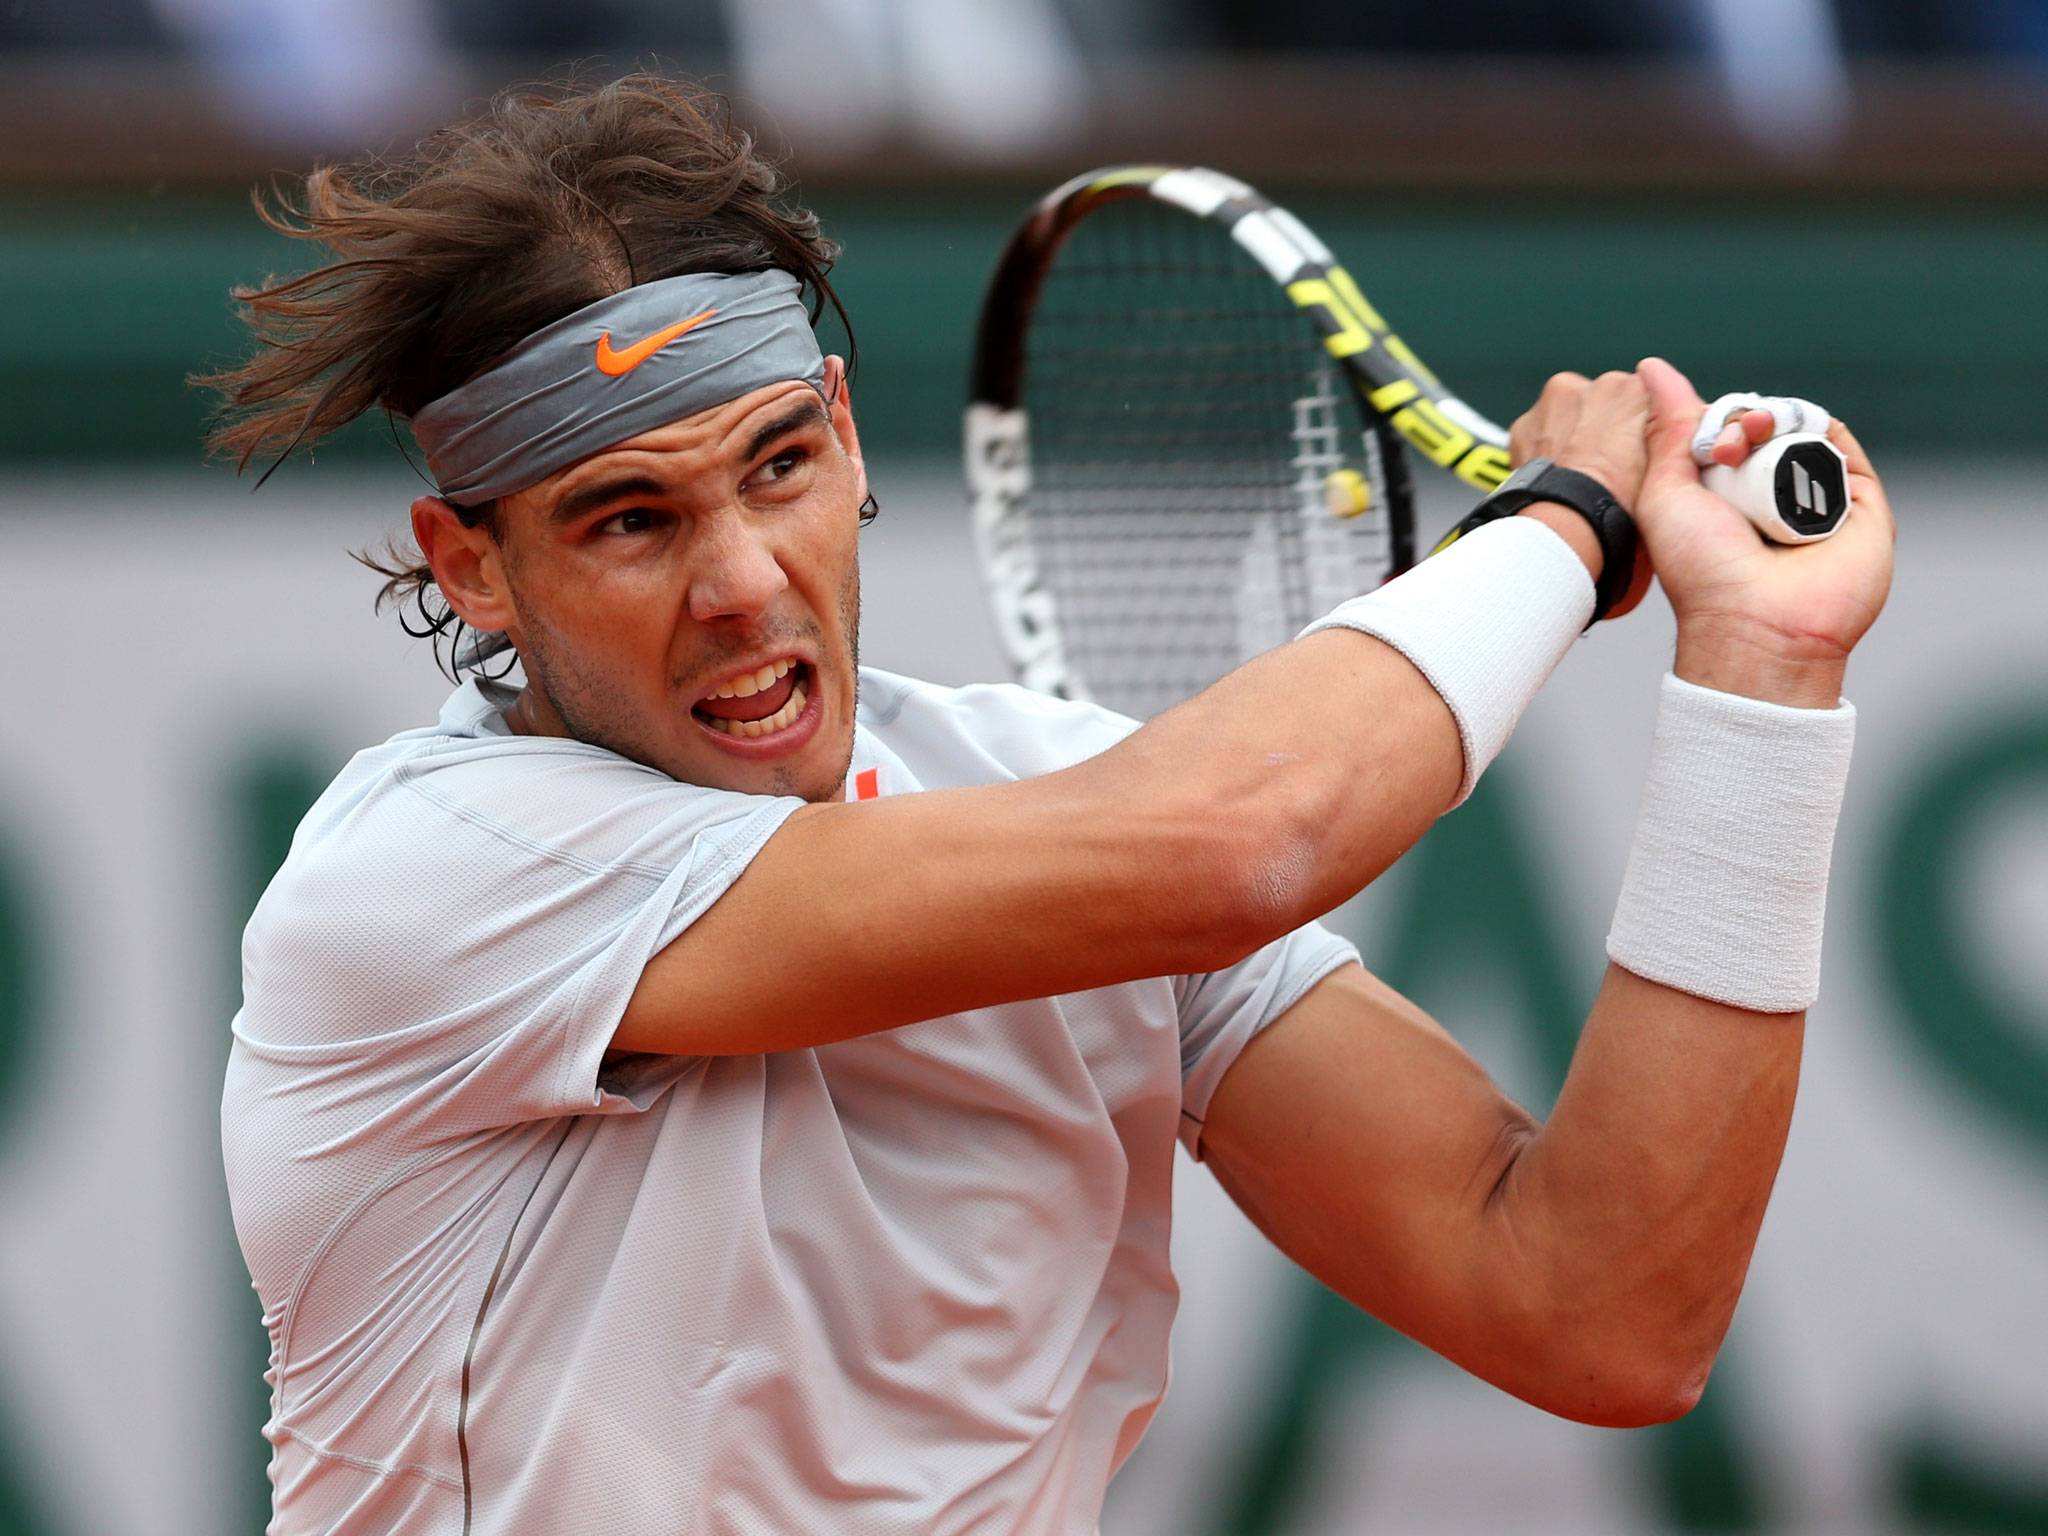 Rafa Nadal Would Win Australian Open 2014 to Complete 2nd Career Grand Slam